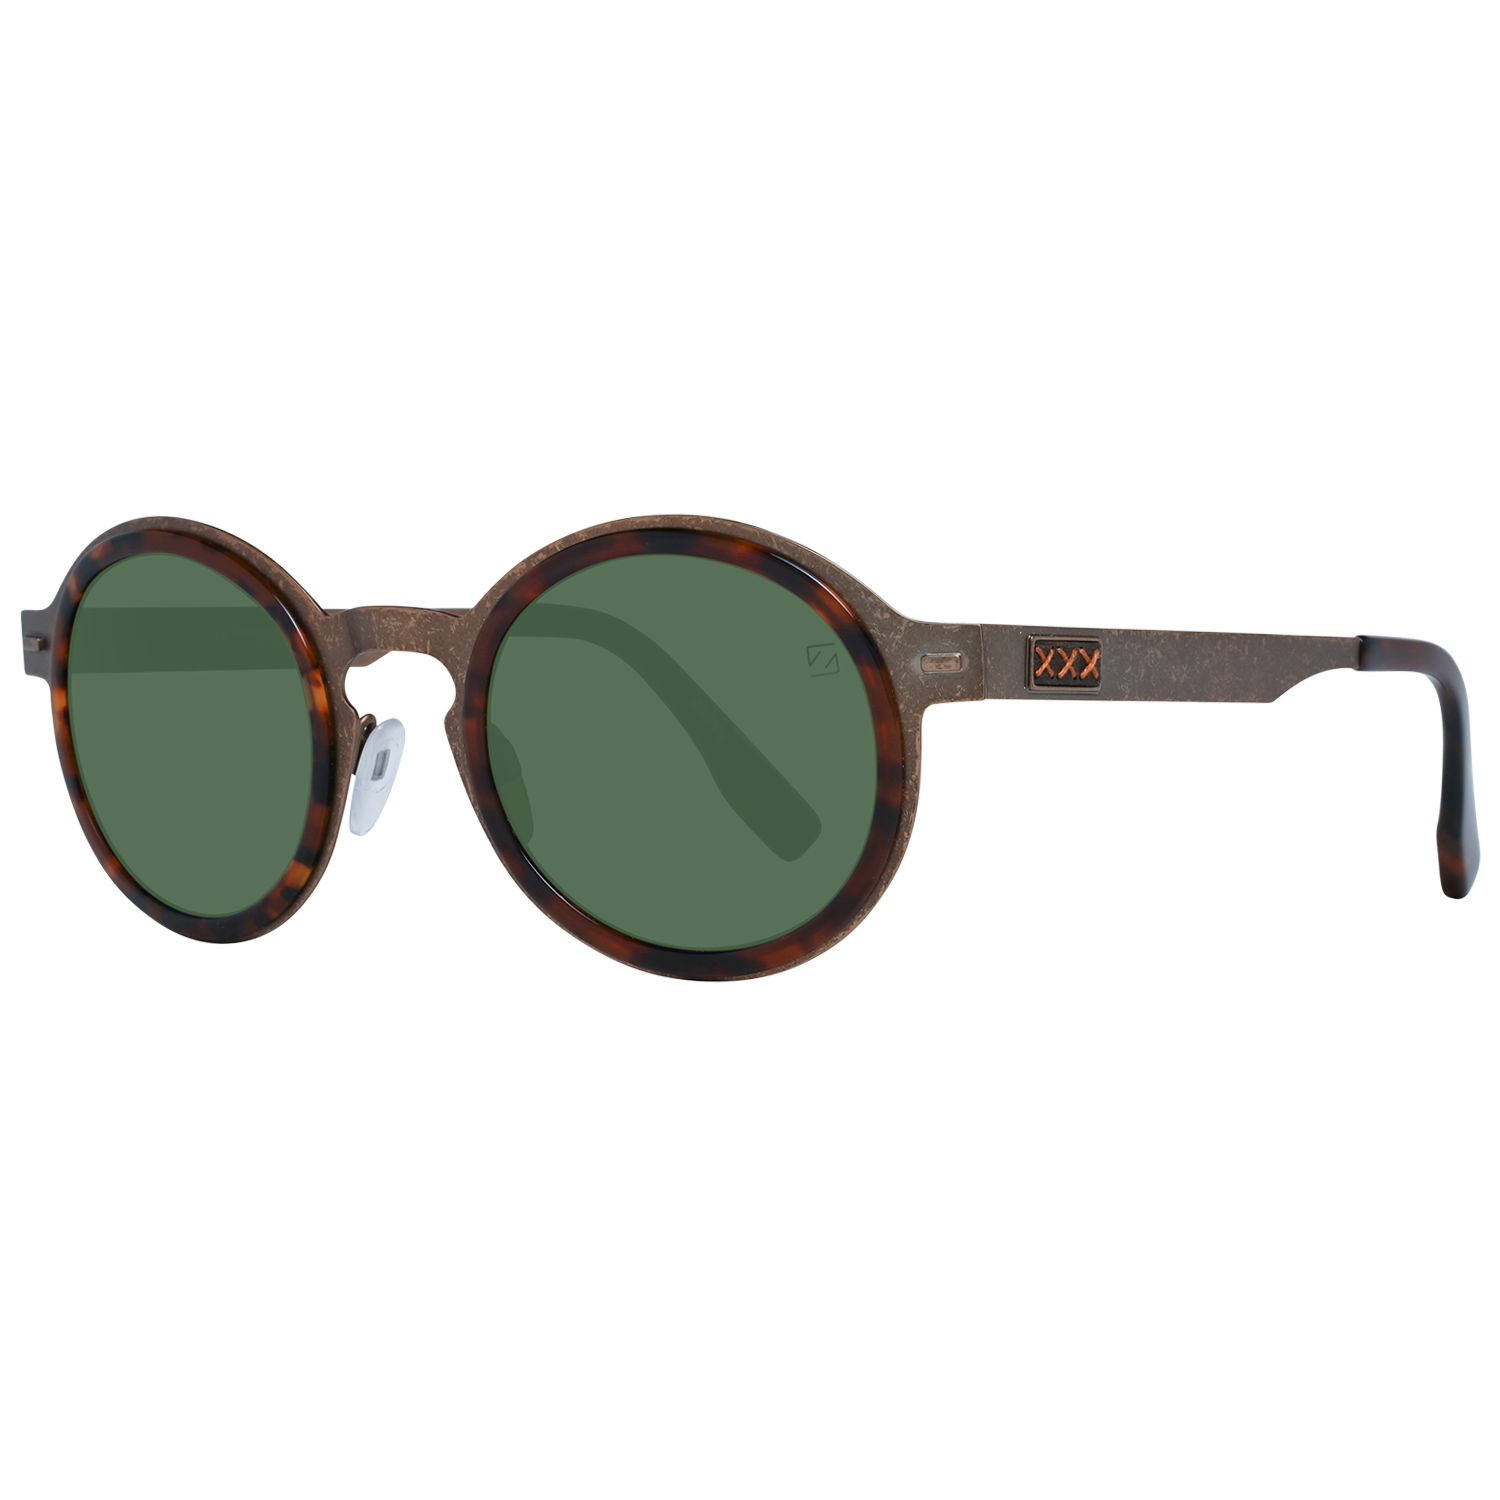 Zegna Couture Sunglasses Zegna Couture Sunglasses ZC0006 49 34R Titanium Eyeglasses Eyewear UK USA Australia 